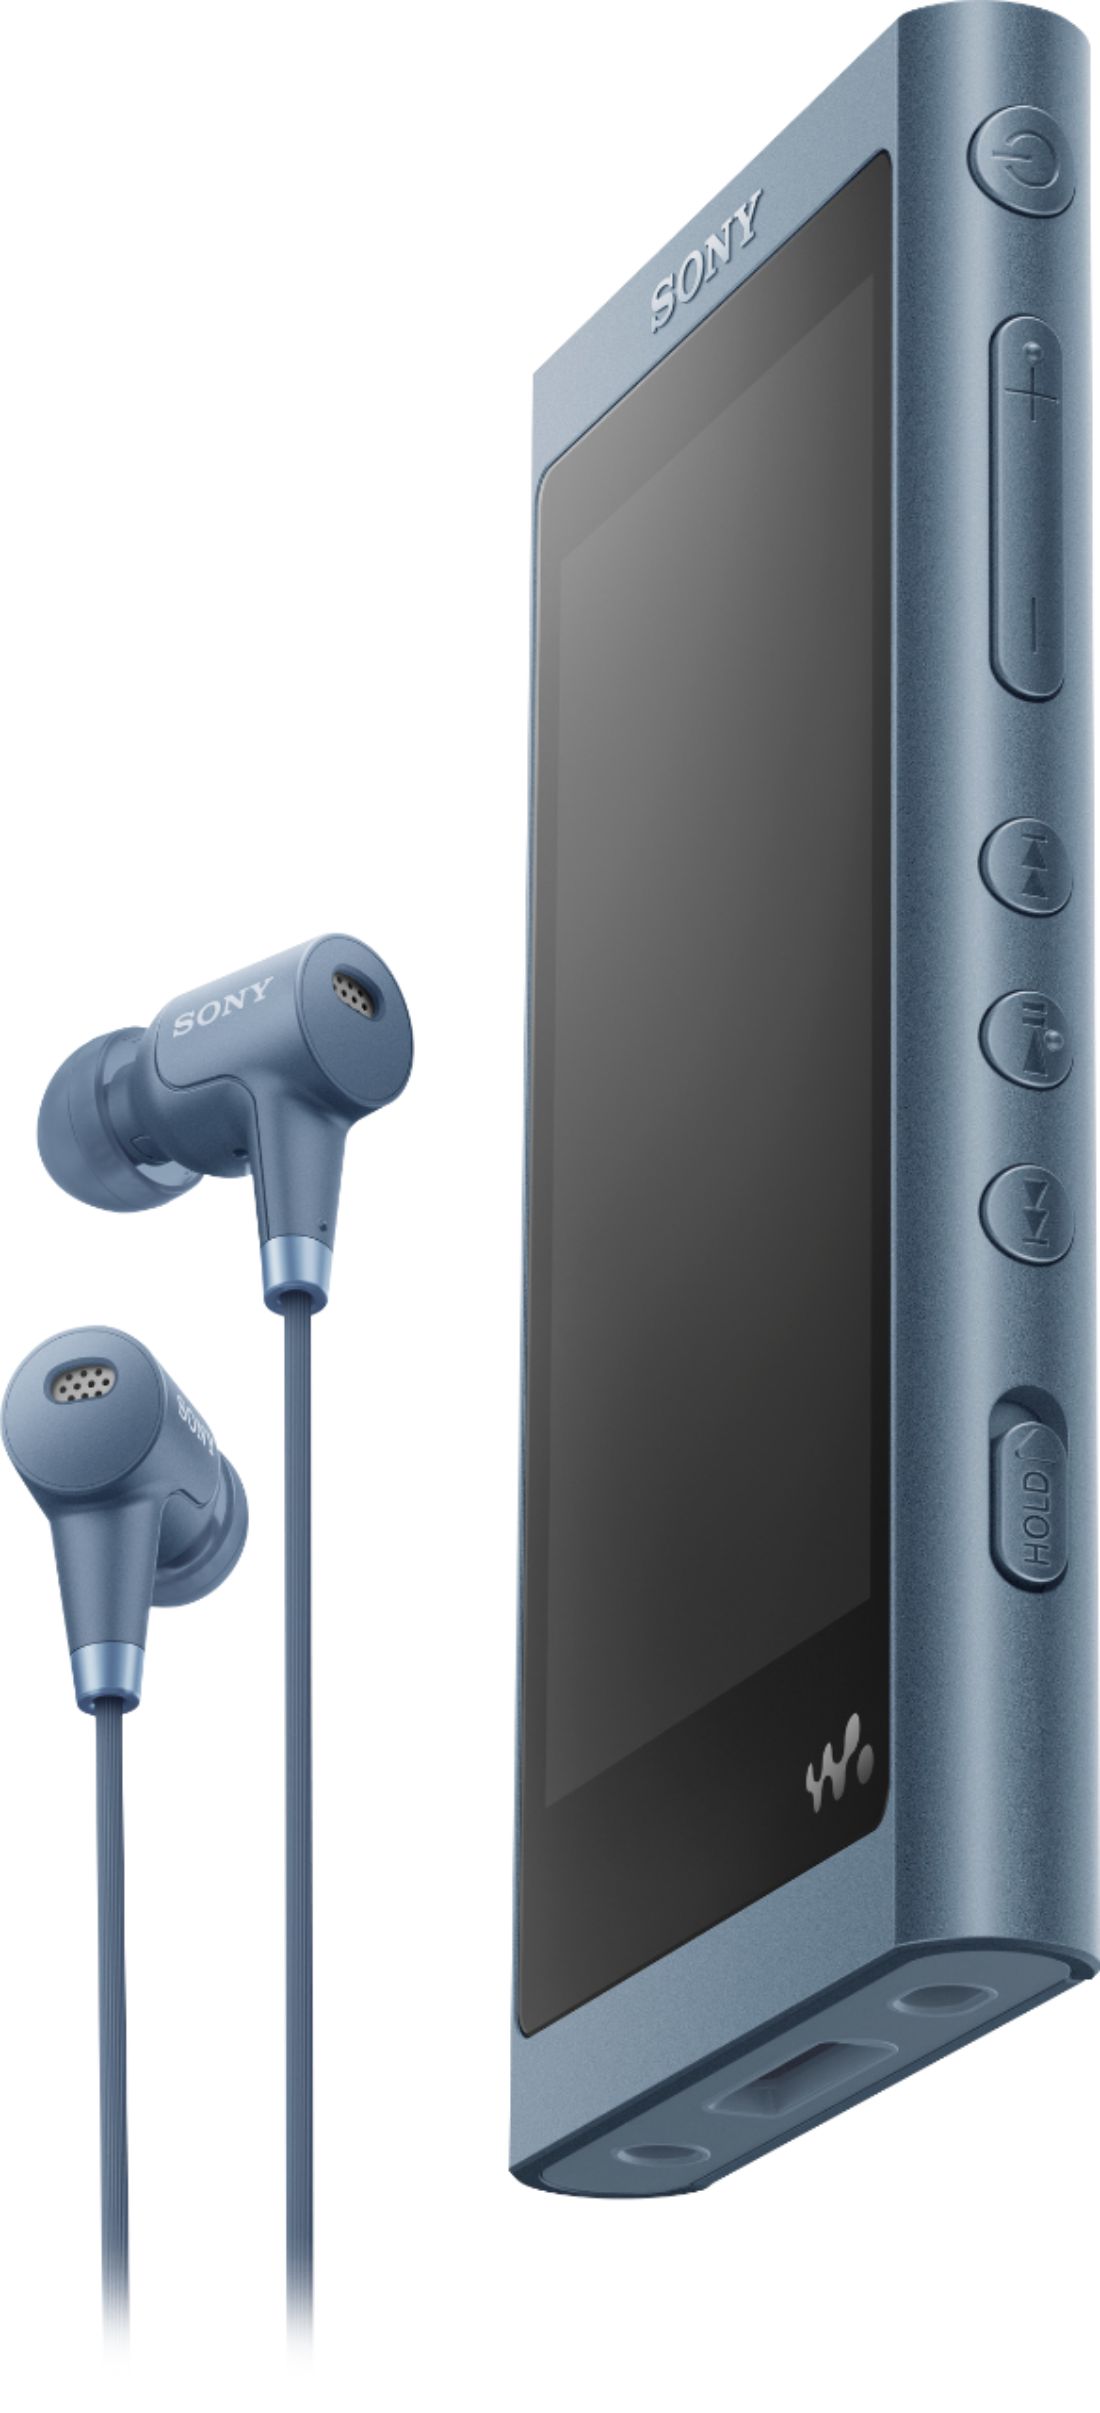 Best Buy: Sony Walkman NW-A55 Hi-Res 16GB* MP3 Player Moonlight